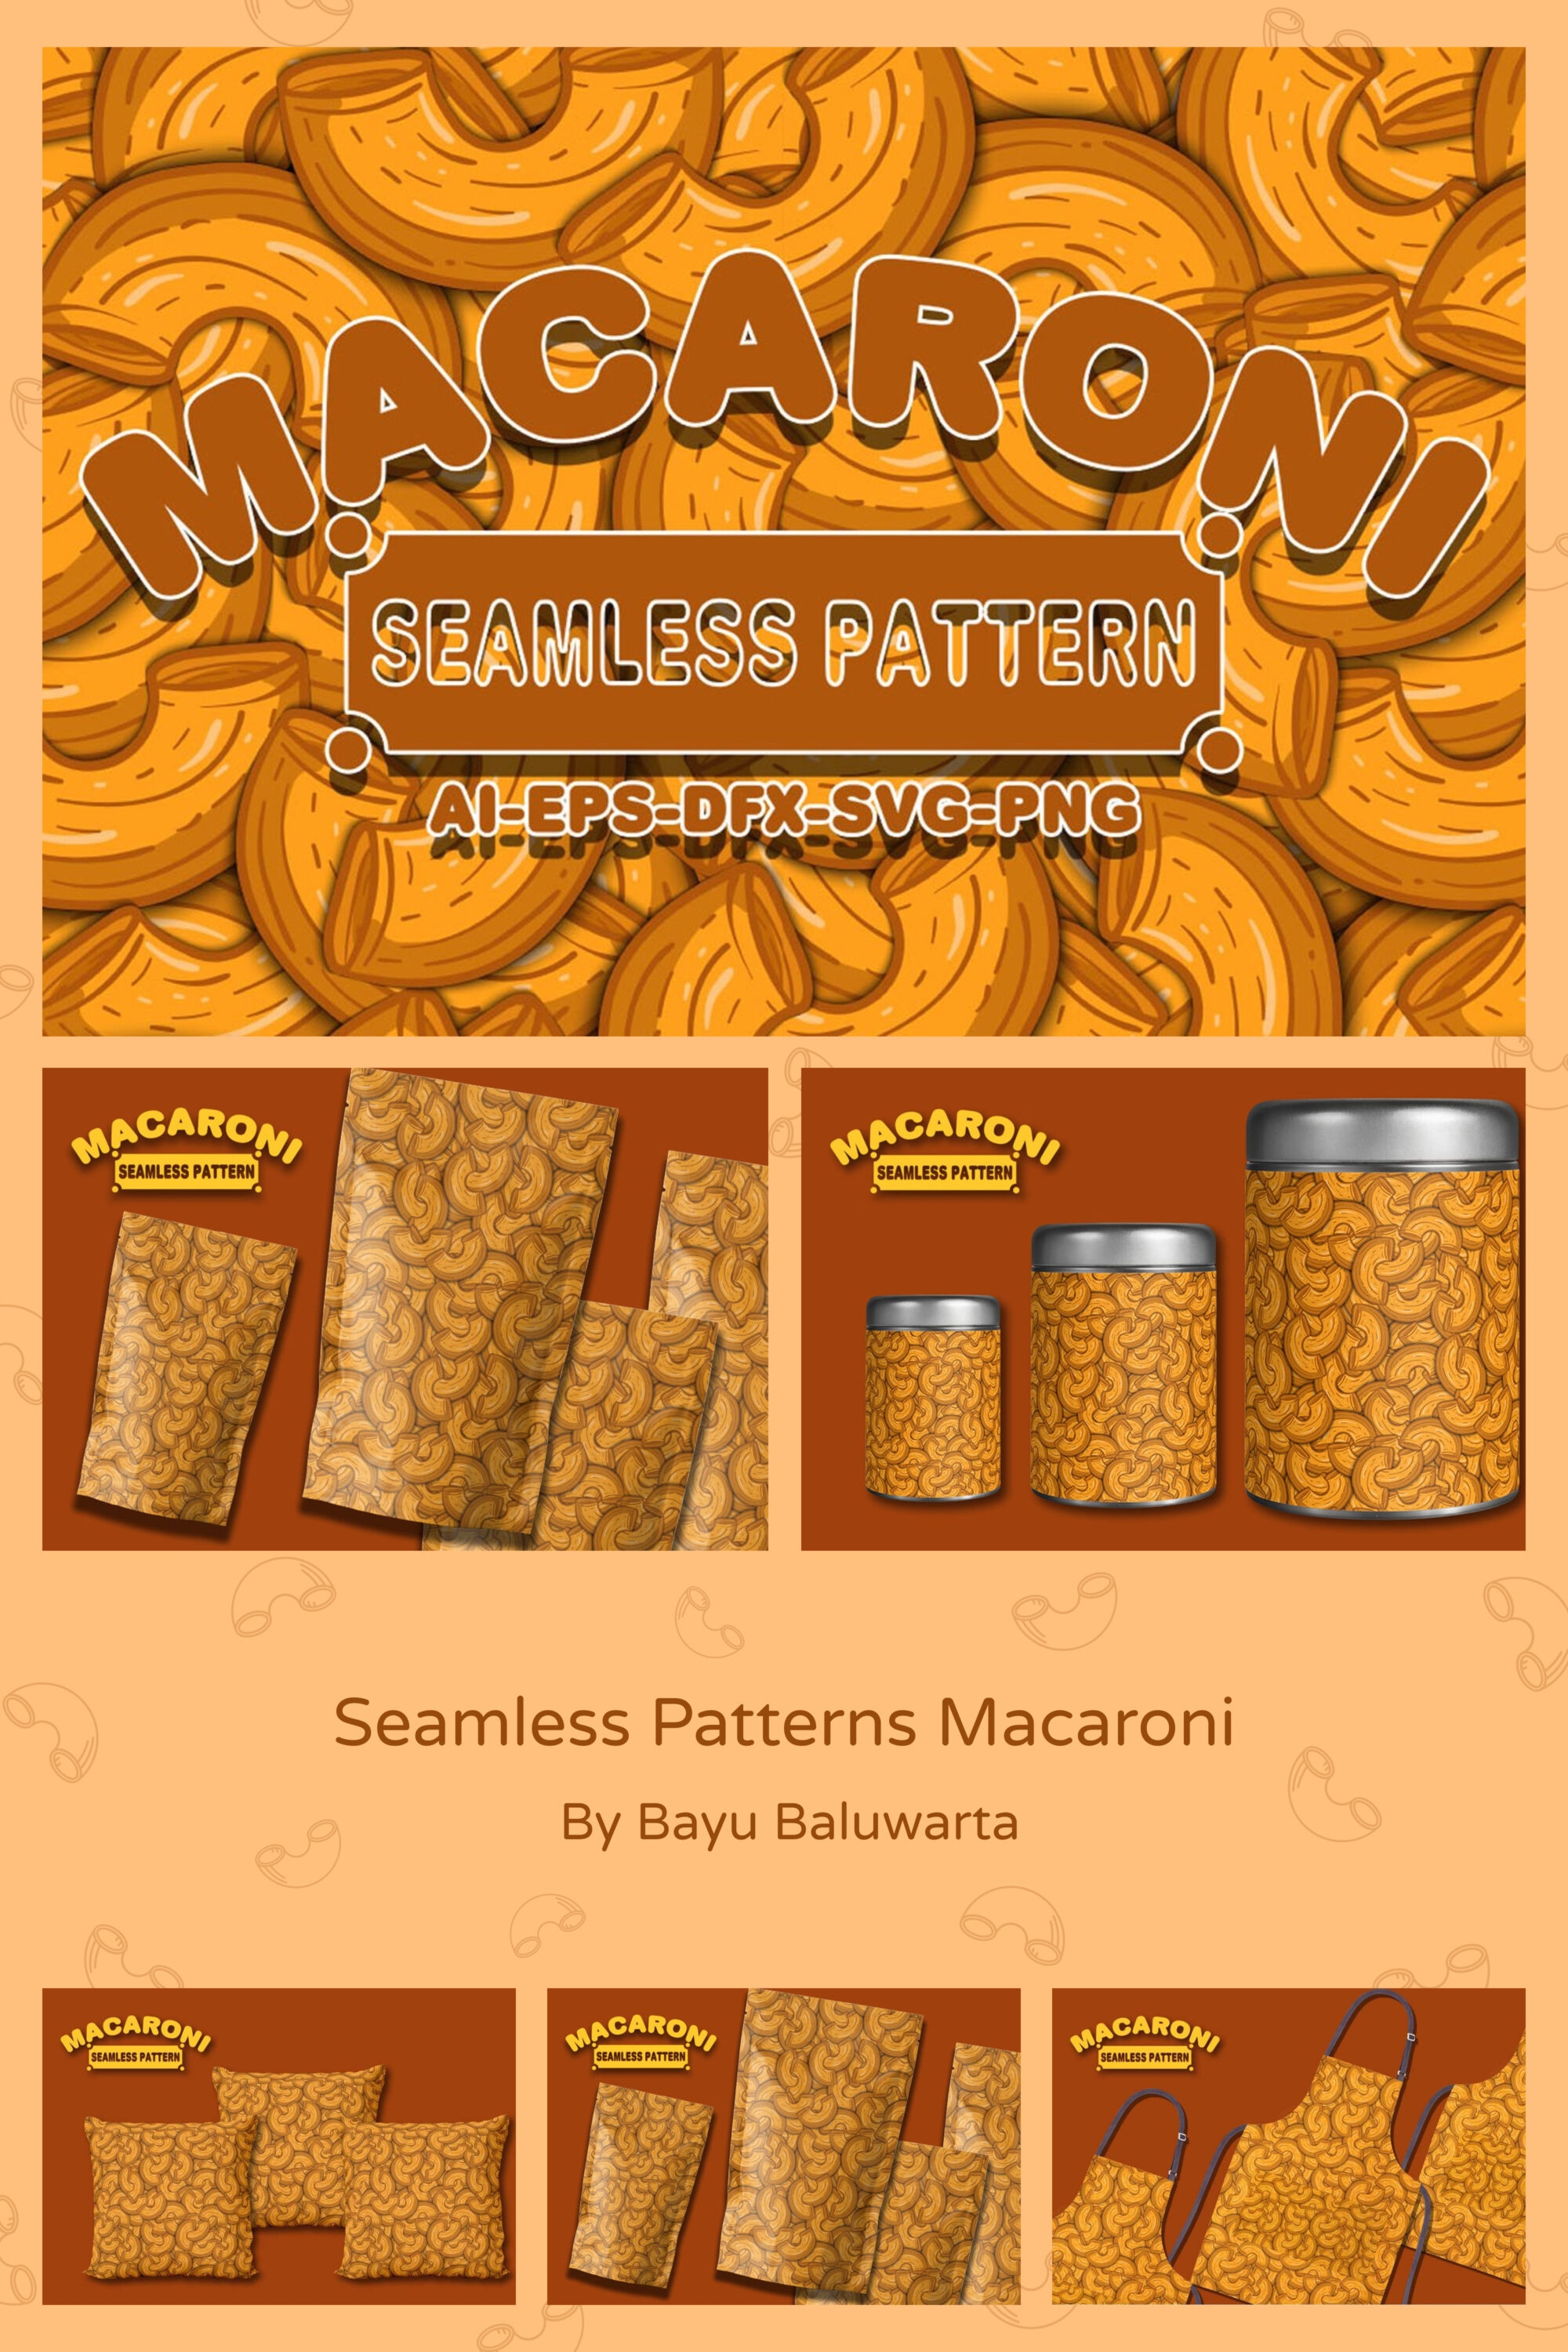 Seamless patterns macaroni of pinterest.